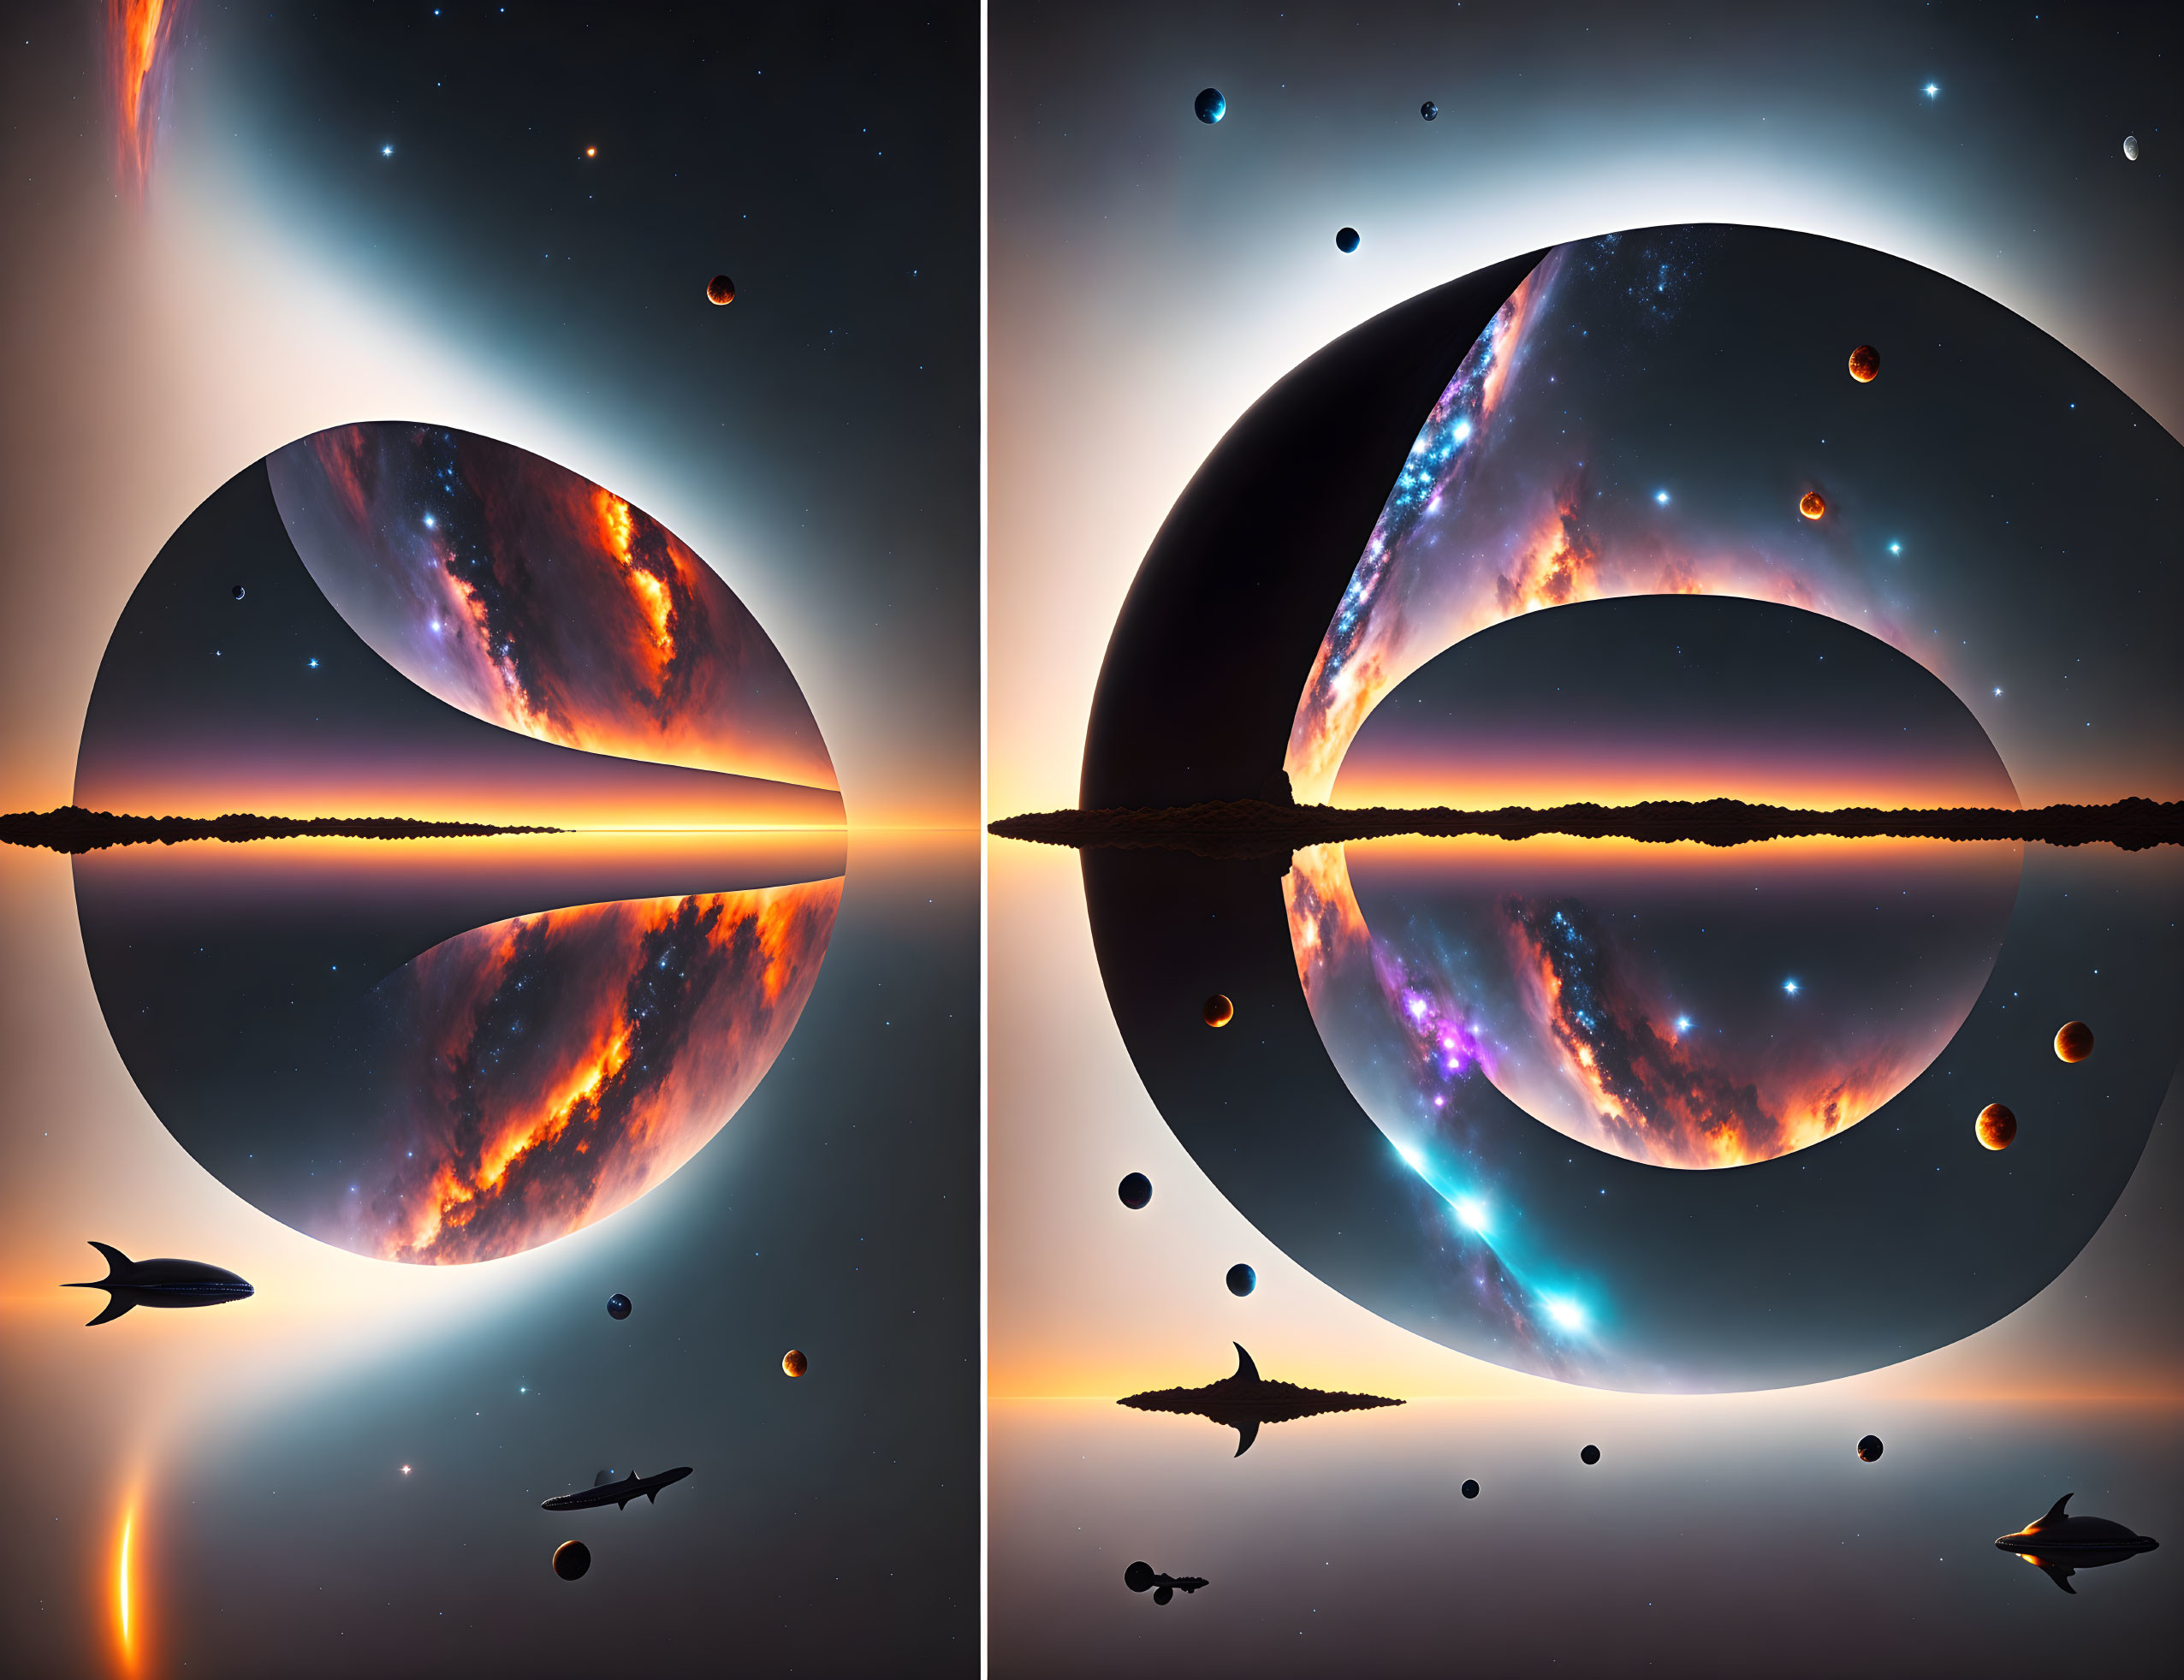 Split celestial bodies reflecting nebulae, stars, and spaceships in surreal cosmic scene